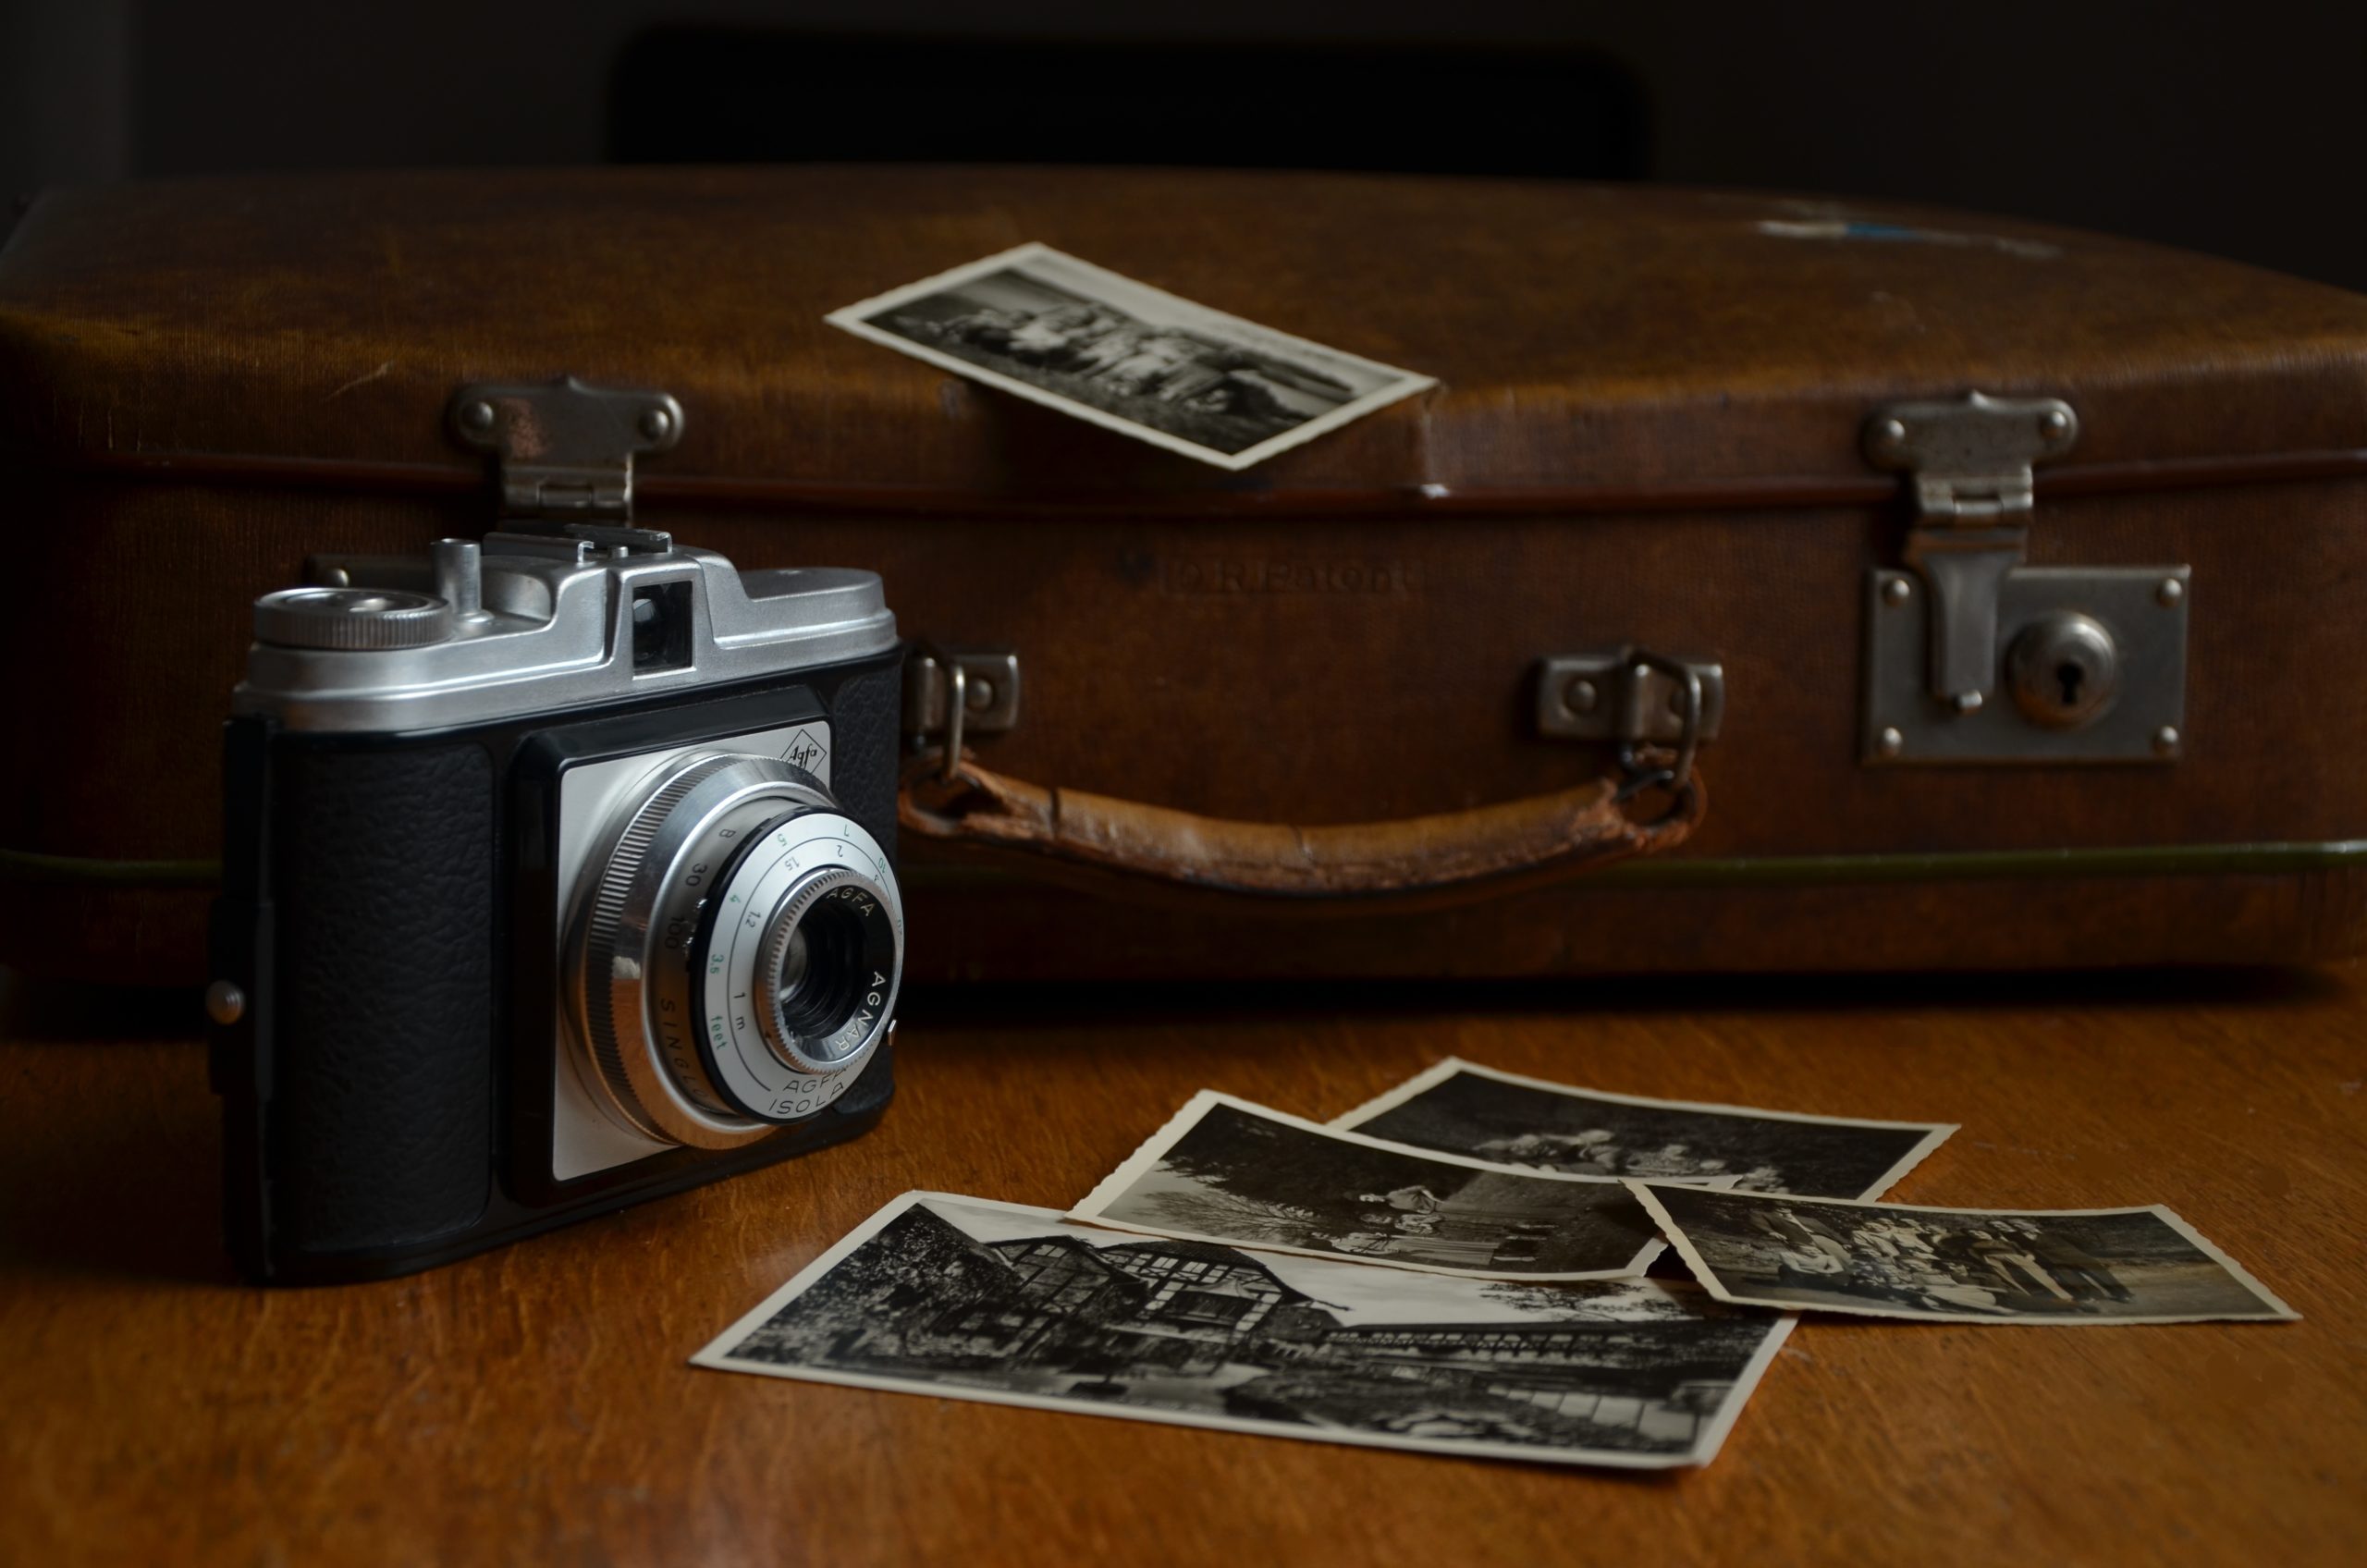 camera, luggage, polaroid photos